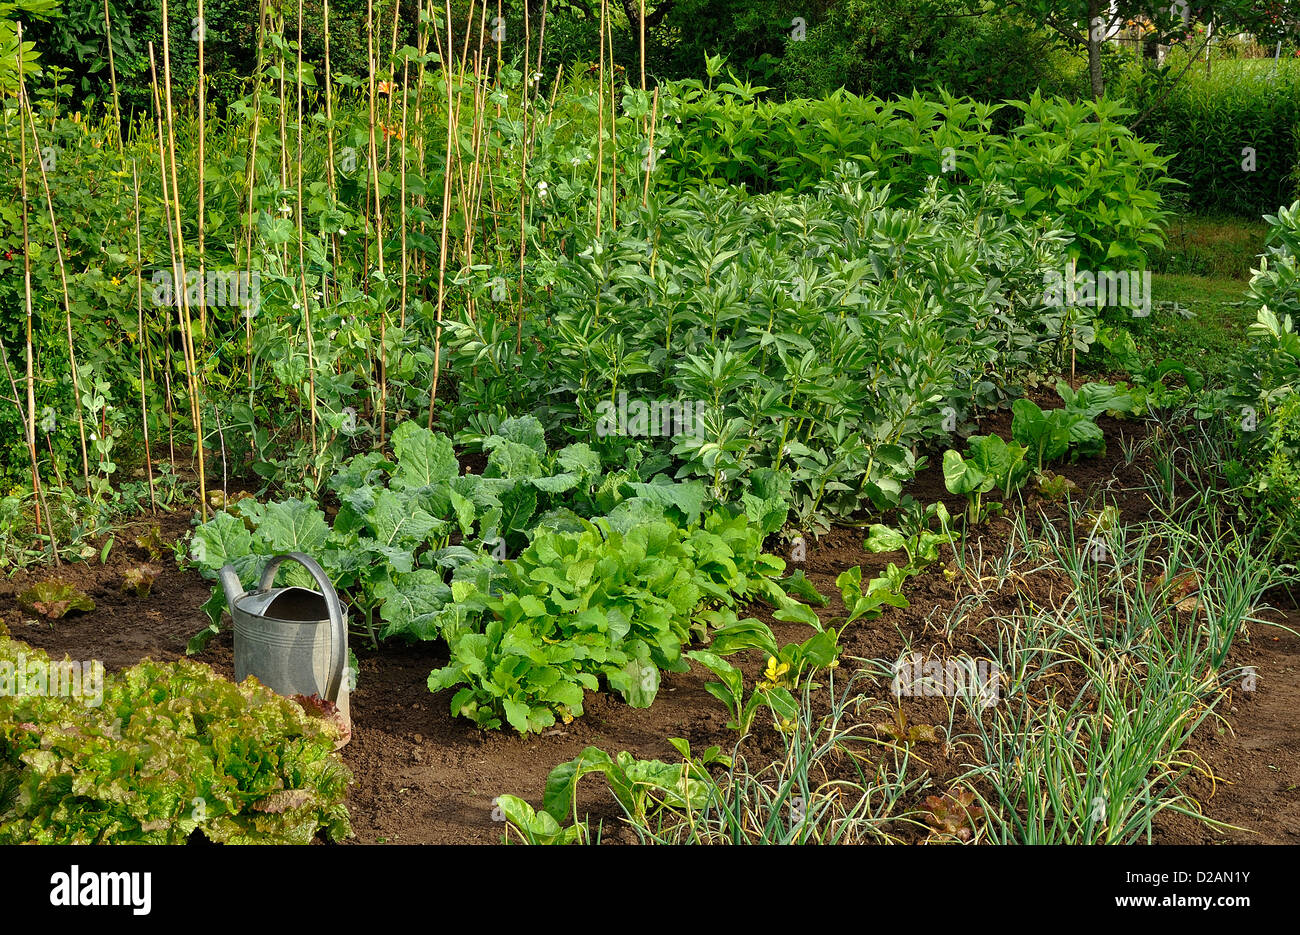 Gemüsegarten, im Juni: Kontingente Batabvia Salat (Sorte: "Rouge Grenobloise"), Knoblauch, Schalotten, rote Beete, Rüben,... Stockfoto